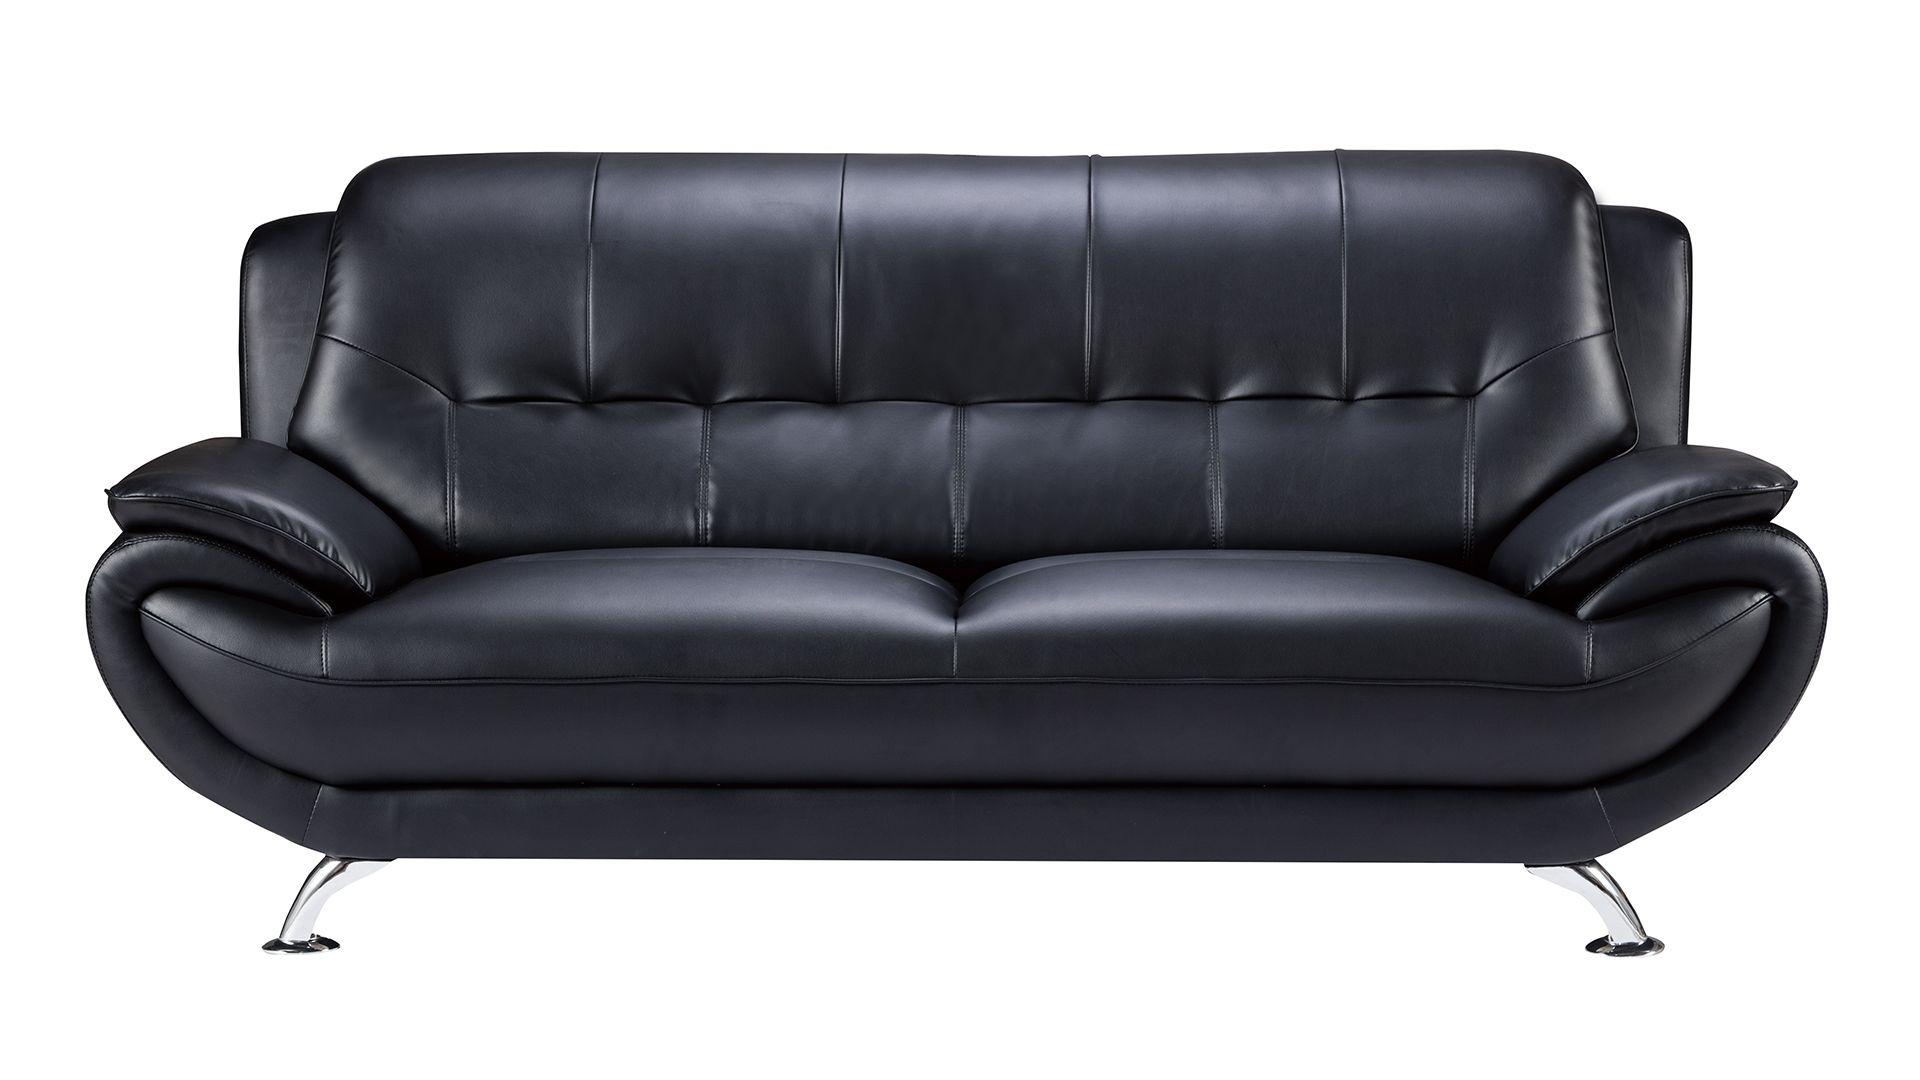 

    
American Eagle Furniture AE208-BK-3PC Sofa Set Black AE208-BK-3PC
